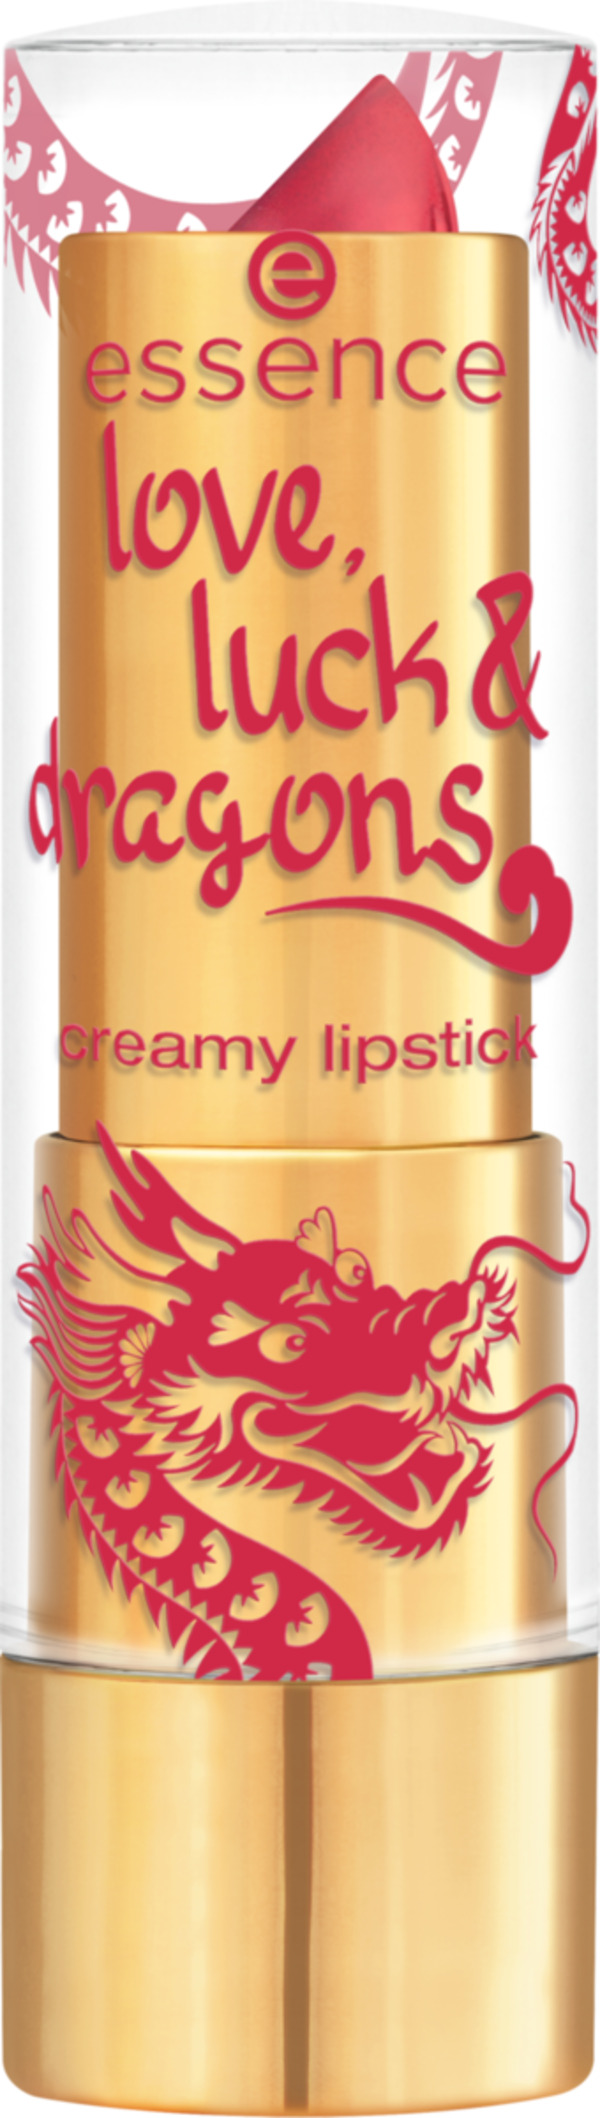 Bild 1 von essence love, luck & dragons creamy lipstick 01 Energy Level: Dragon-like